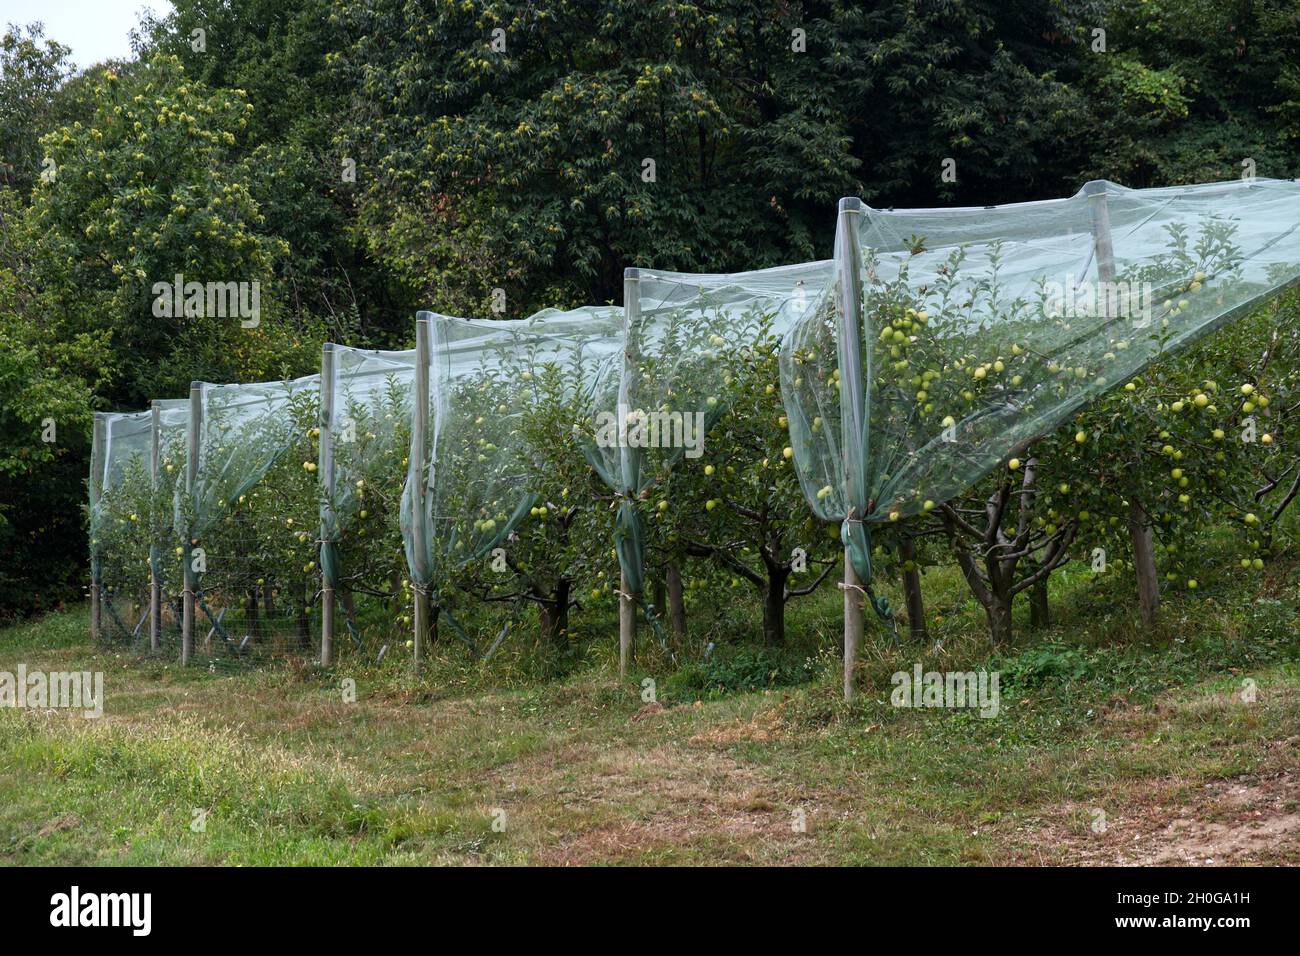 coltivazione biologica intensiva di mele ricoperte di rete antiparassitaria antigrandine Foto Stock